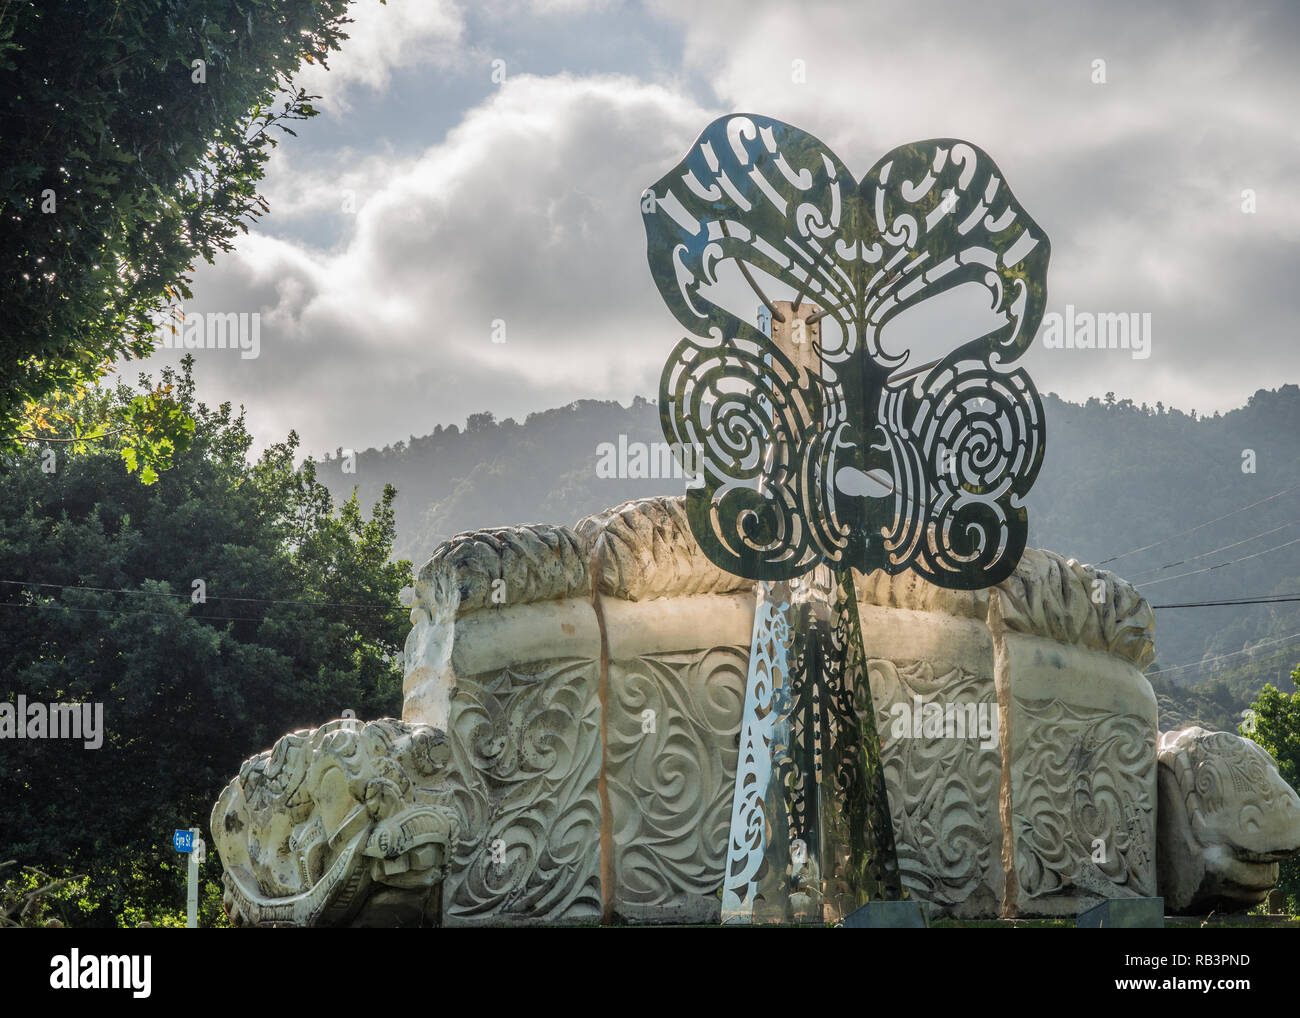 Kings' Mask steel sculpture, based on the moko design of the first and second Maori kings, King Tawhiao and King Potatau, Ngaruawahia, New Zealand Stock Photo